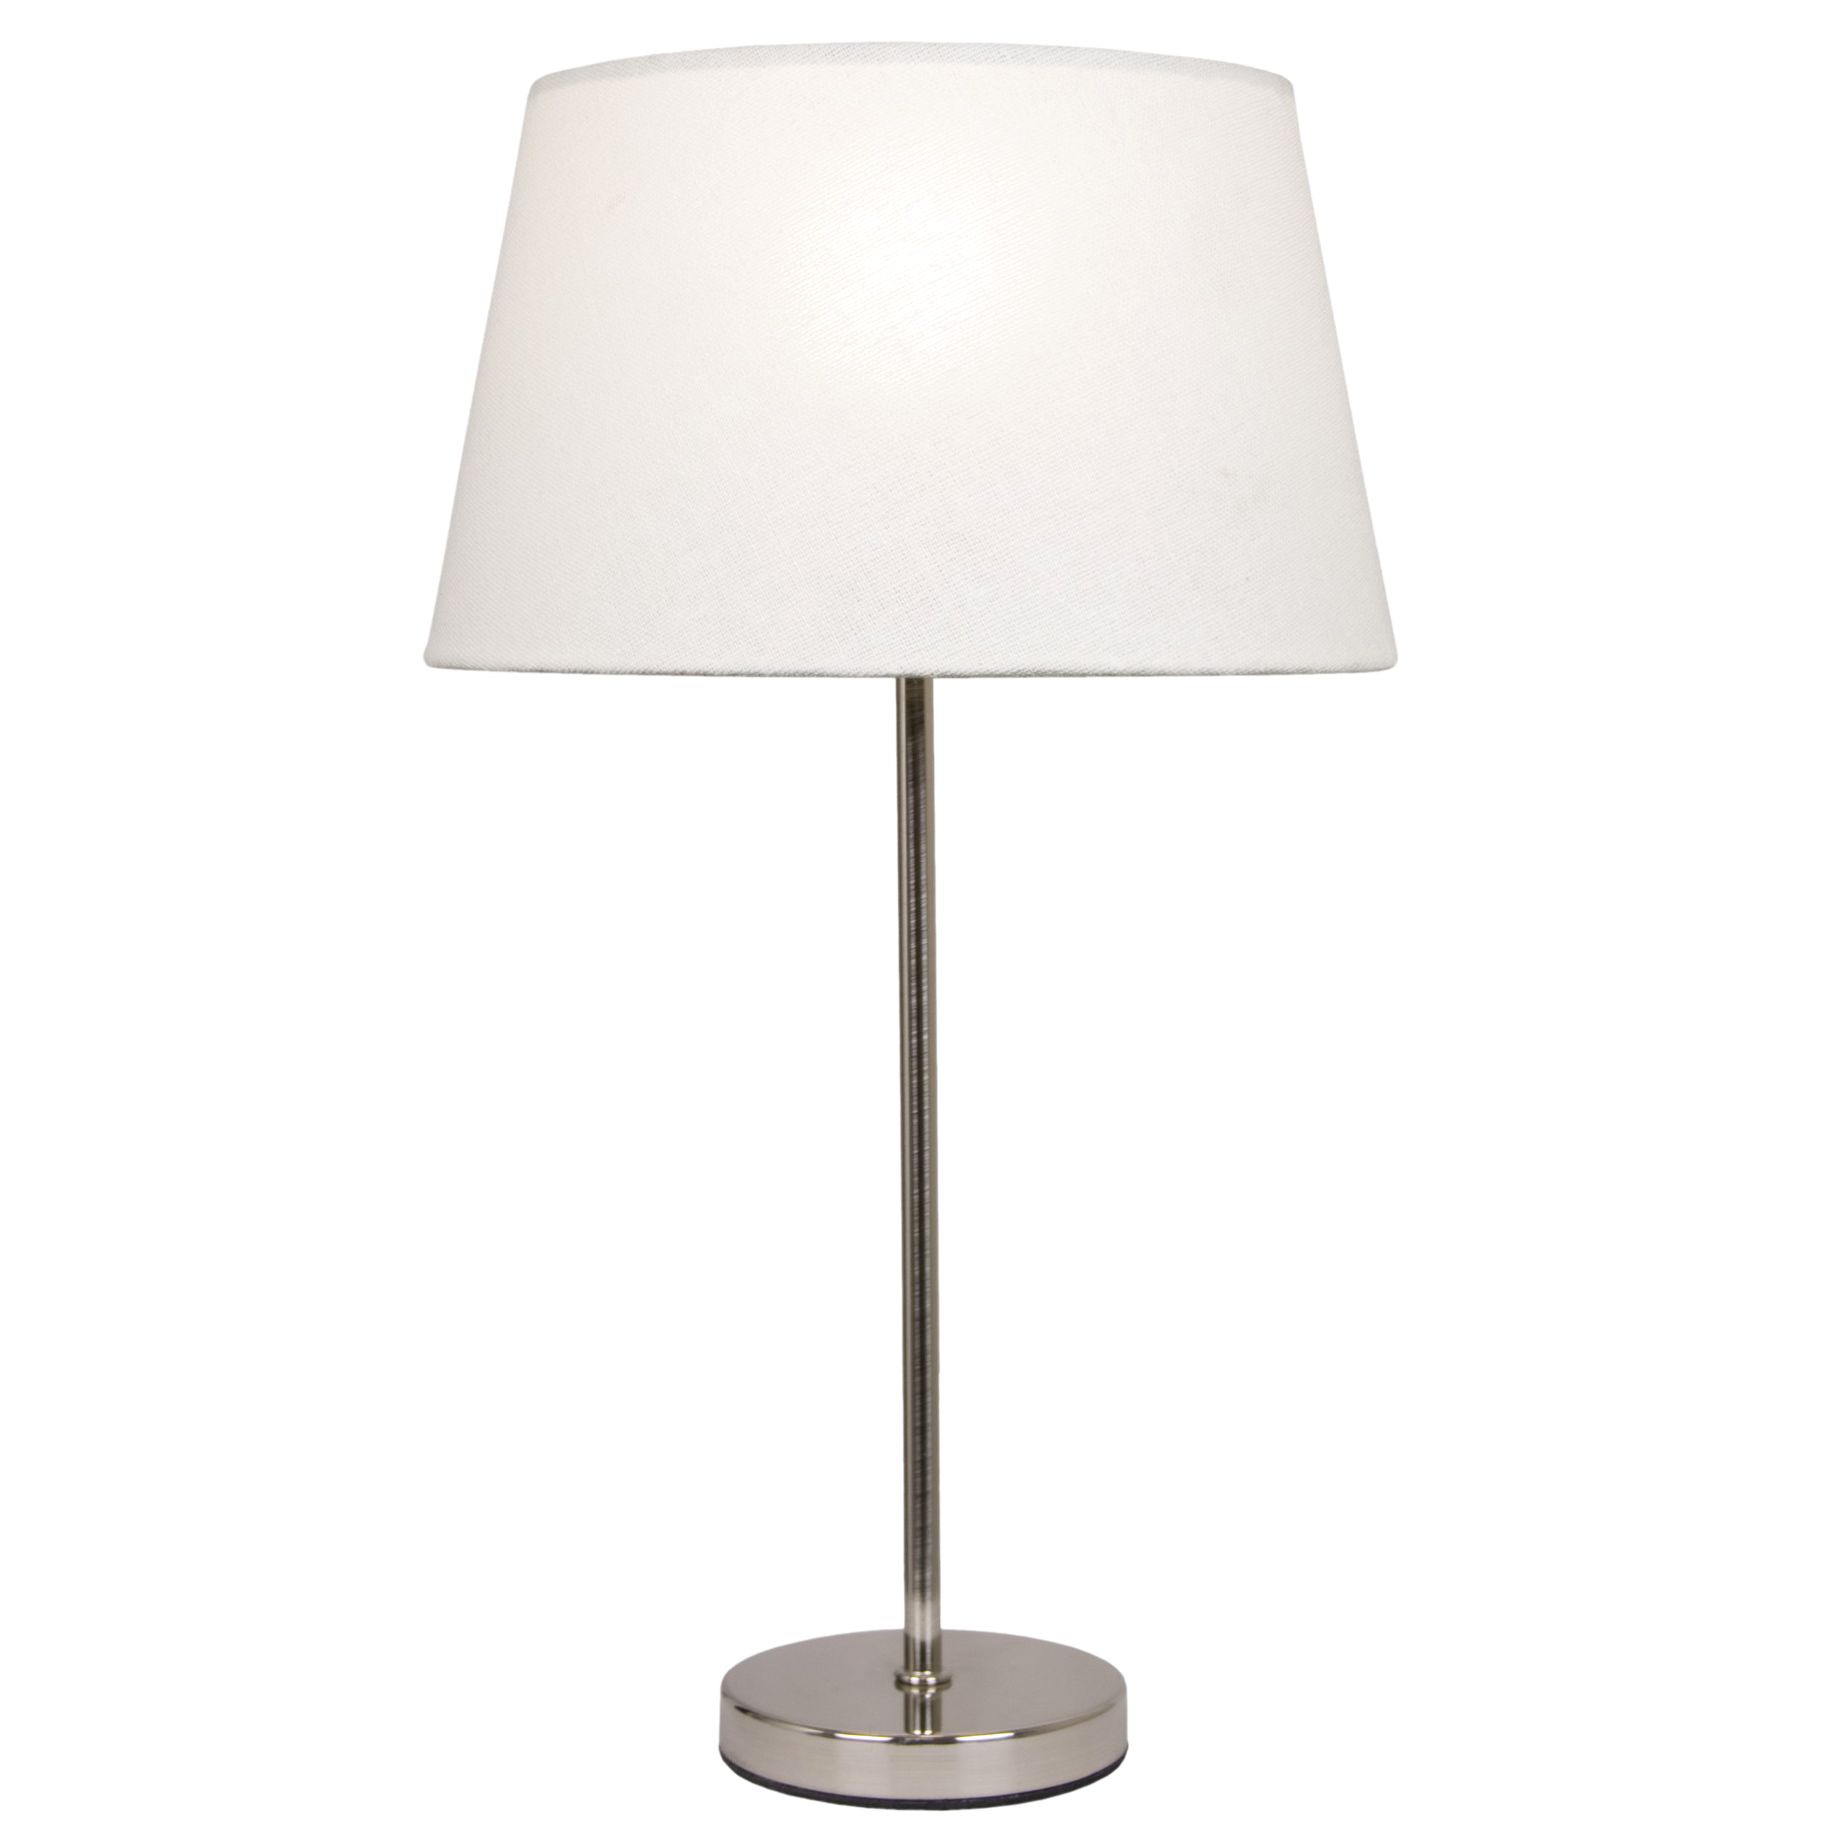 John Lewis Nicole Table Lamp, Natural